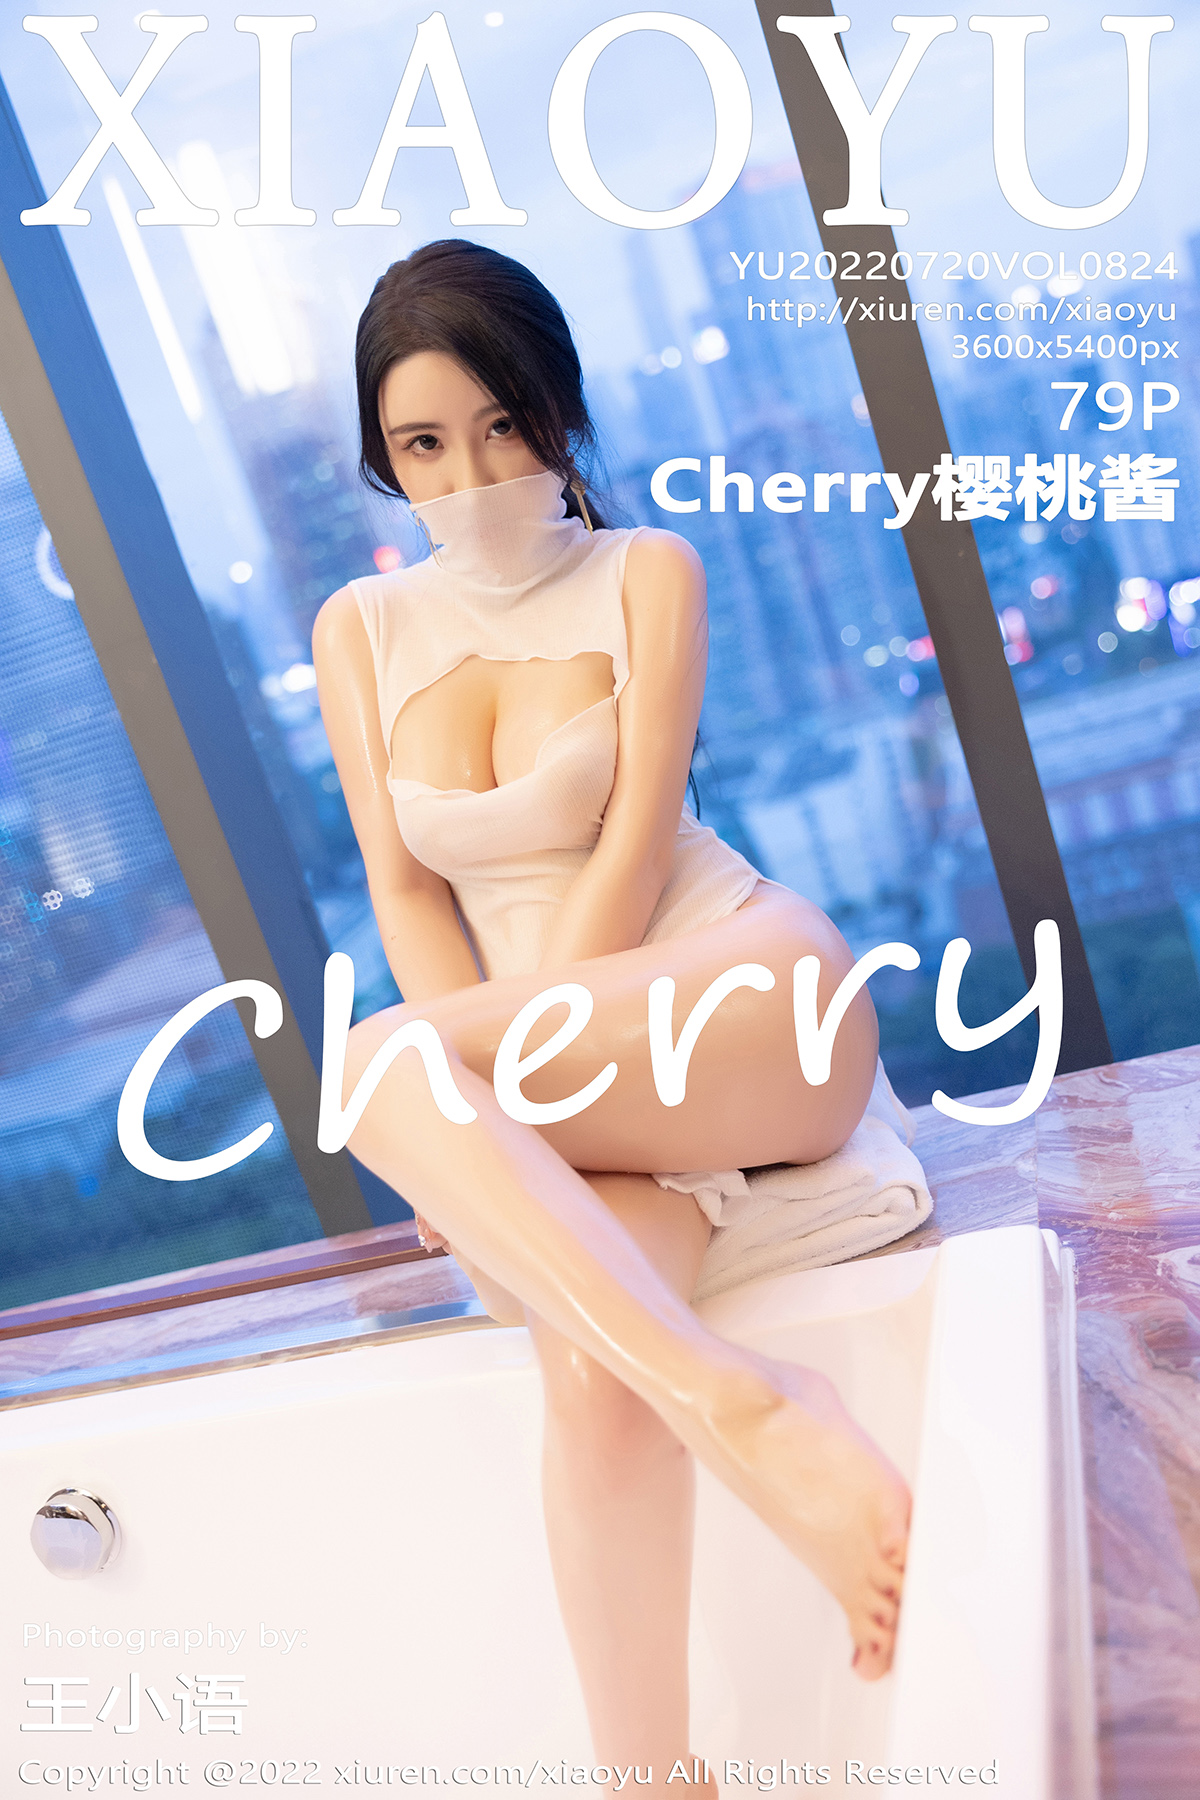 【XIAOYU語畫界】2022.07.20 Vol.824 Cherry櫻桃醬 完整版無水印寫真【79P】 - 貼圖 - 清涼寫真 -